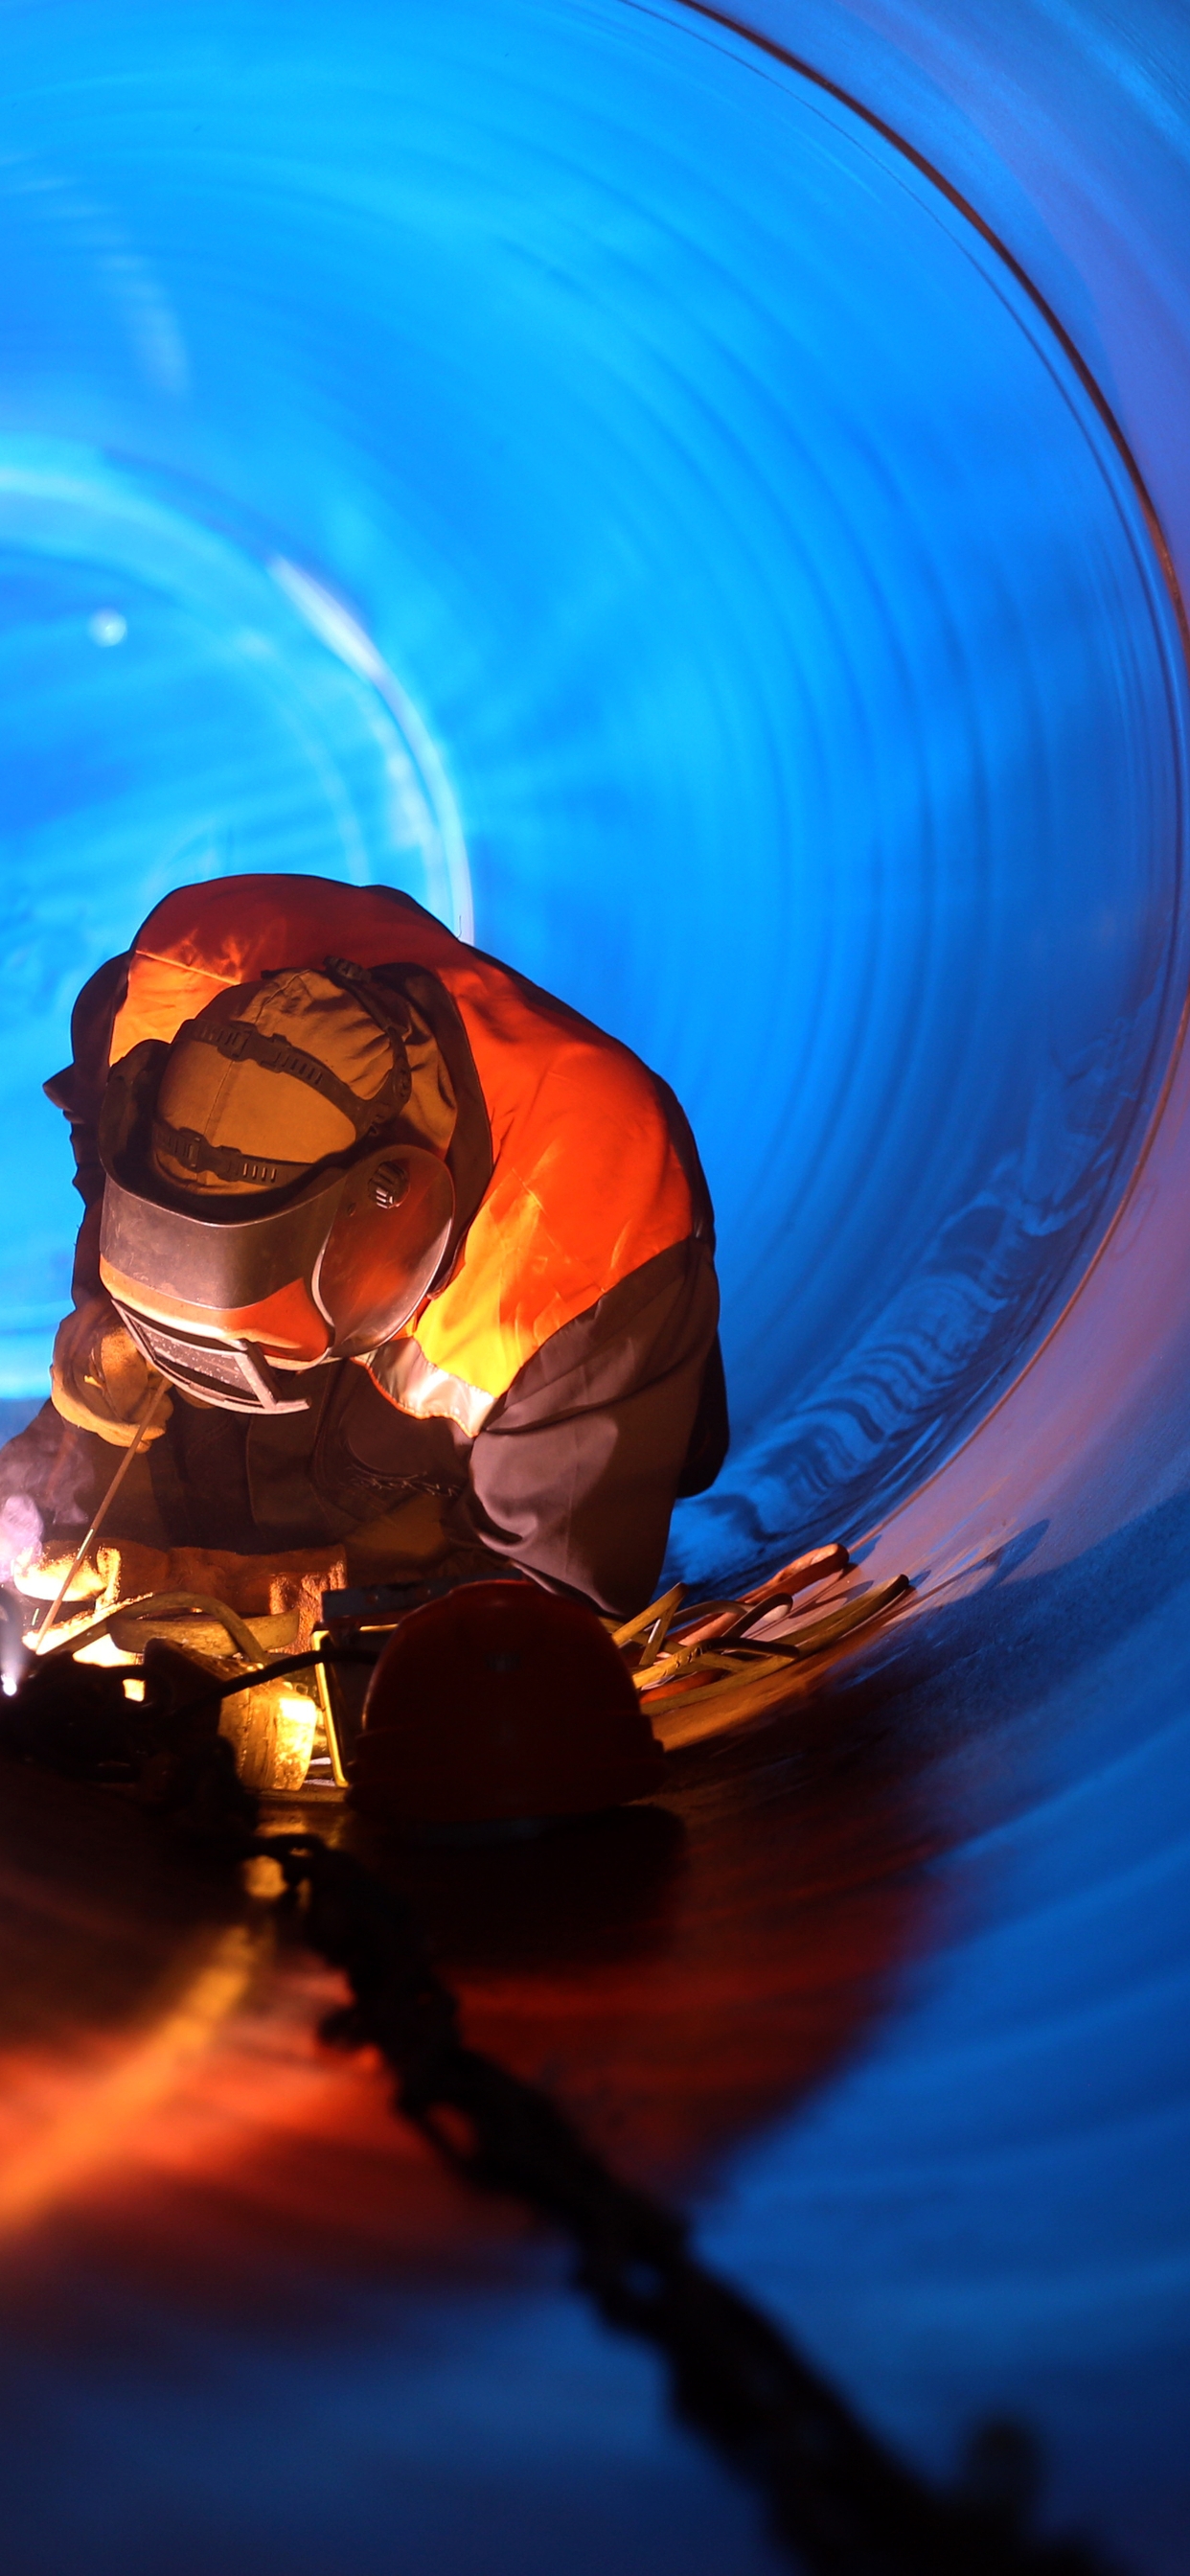 Image: Man, welder, work, cook, pipe, space, radiation